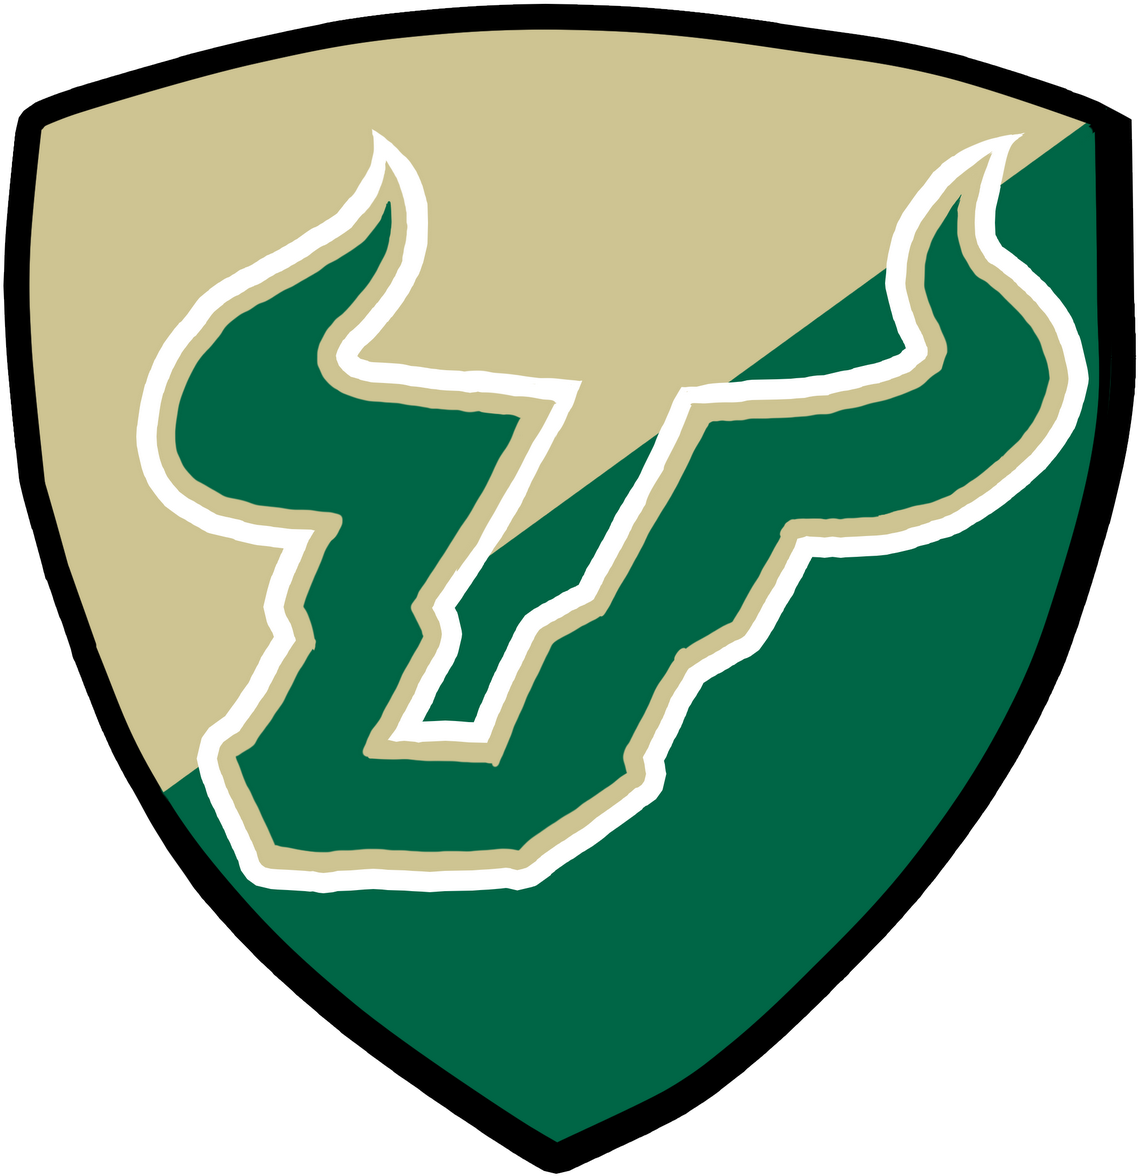 Wappen South Florida Bulls  79138